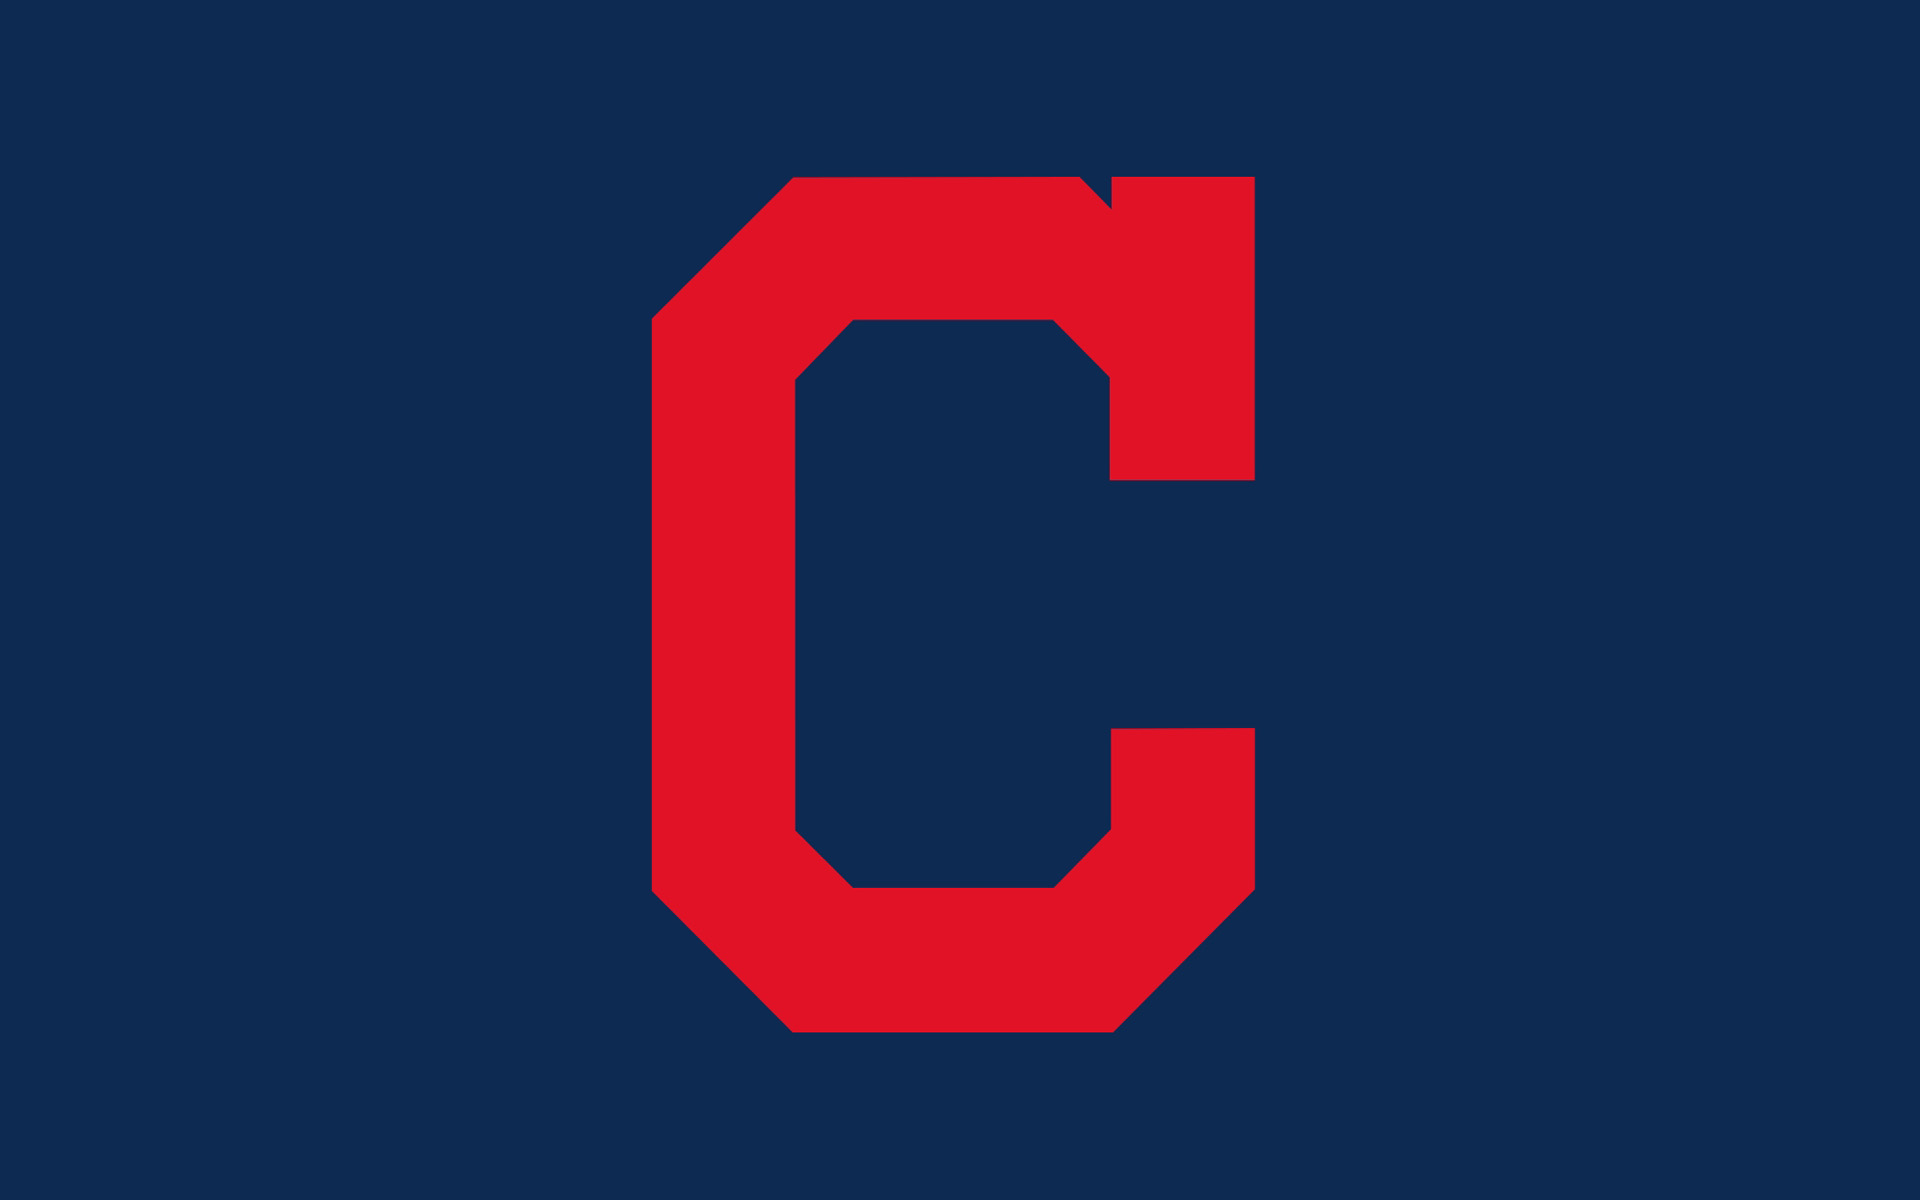 Cleveland Indians Mlb Baseball 55 Wallpapers Hd Desktop And Mobile Backgrounds